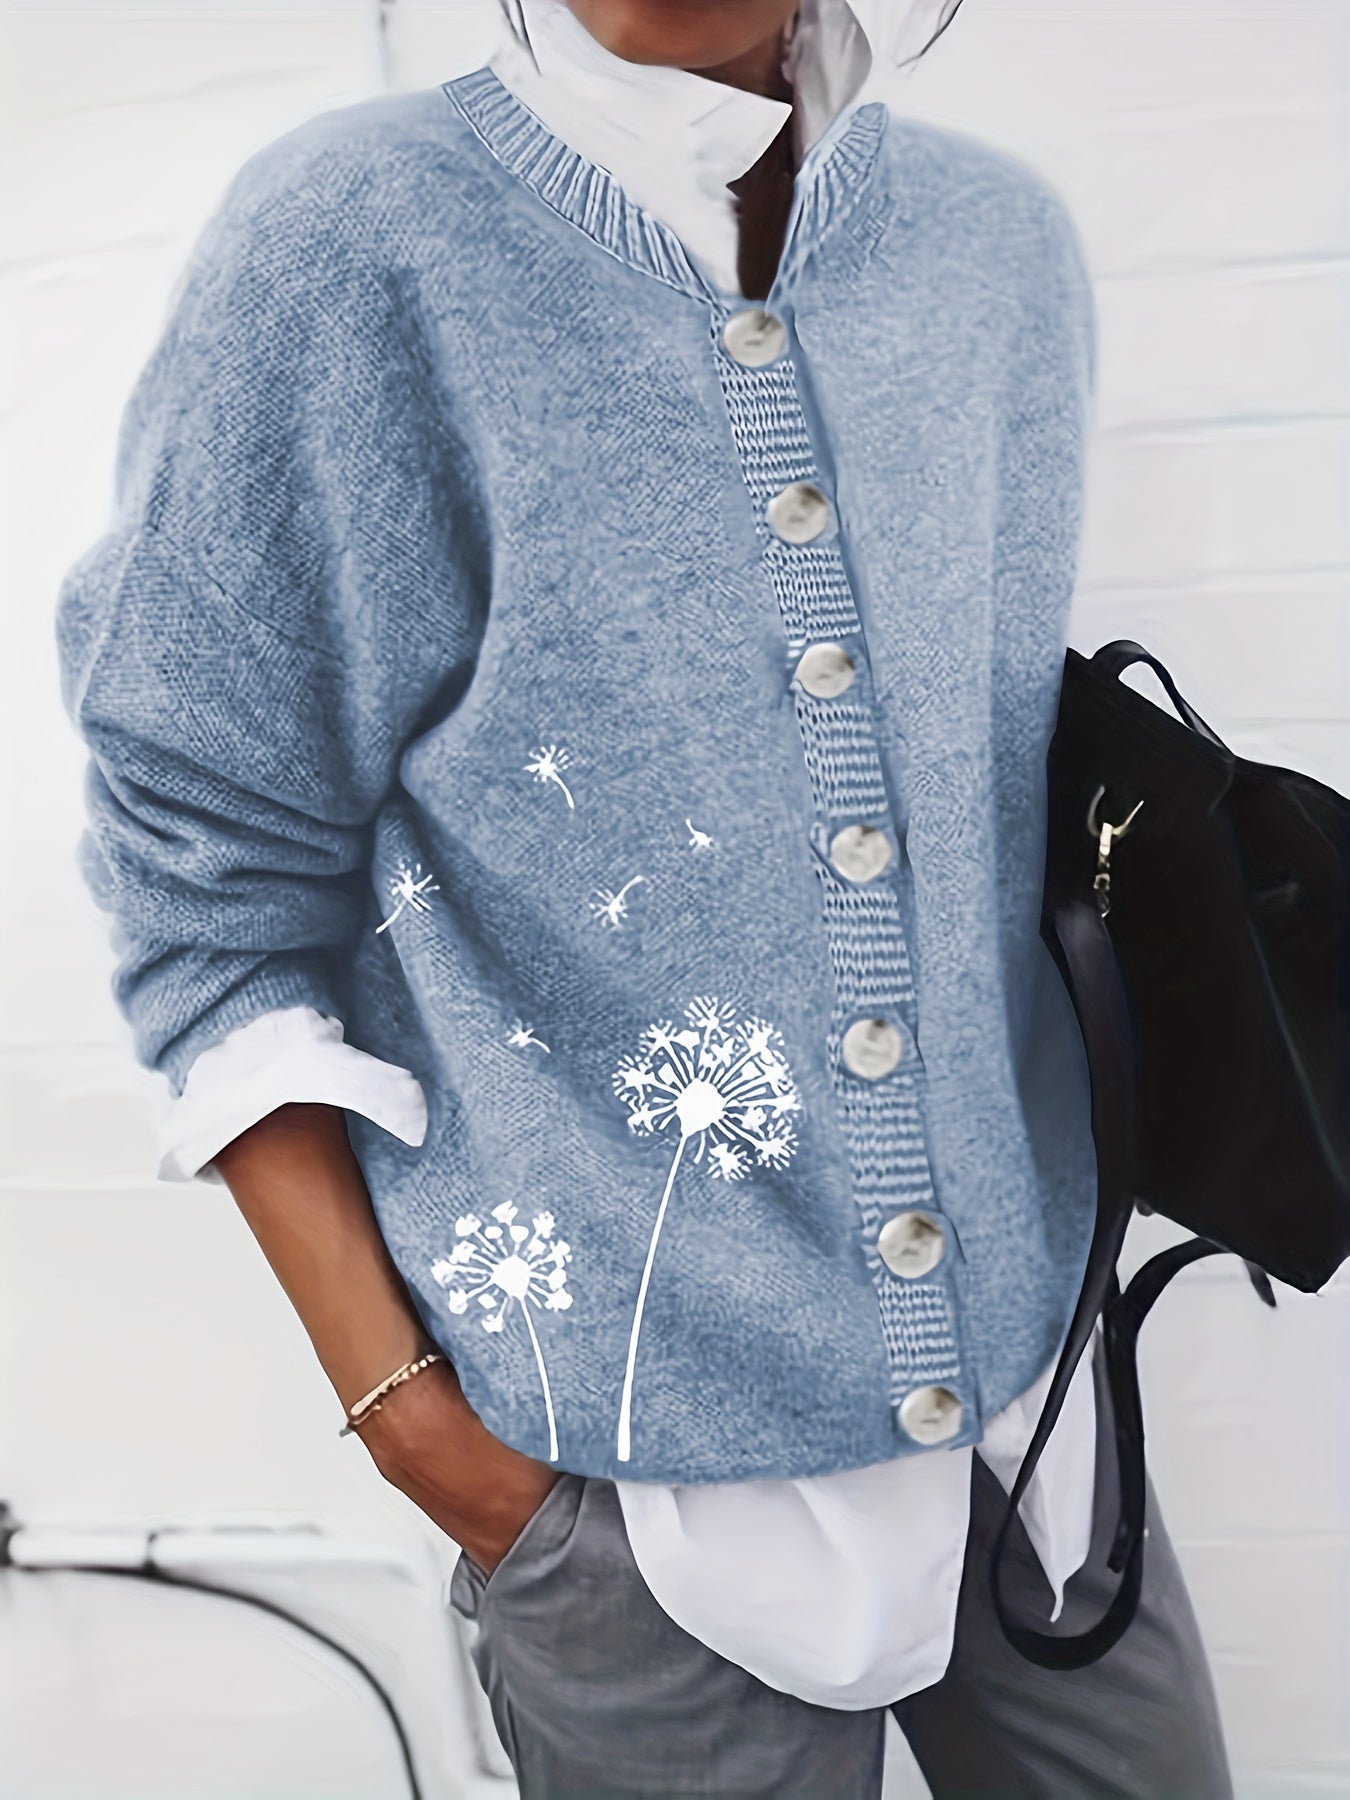 Vorioal Super Comfy Sweater Warm Cardigan